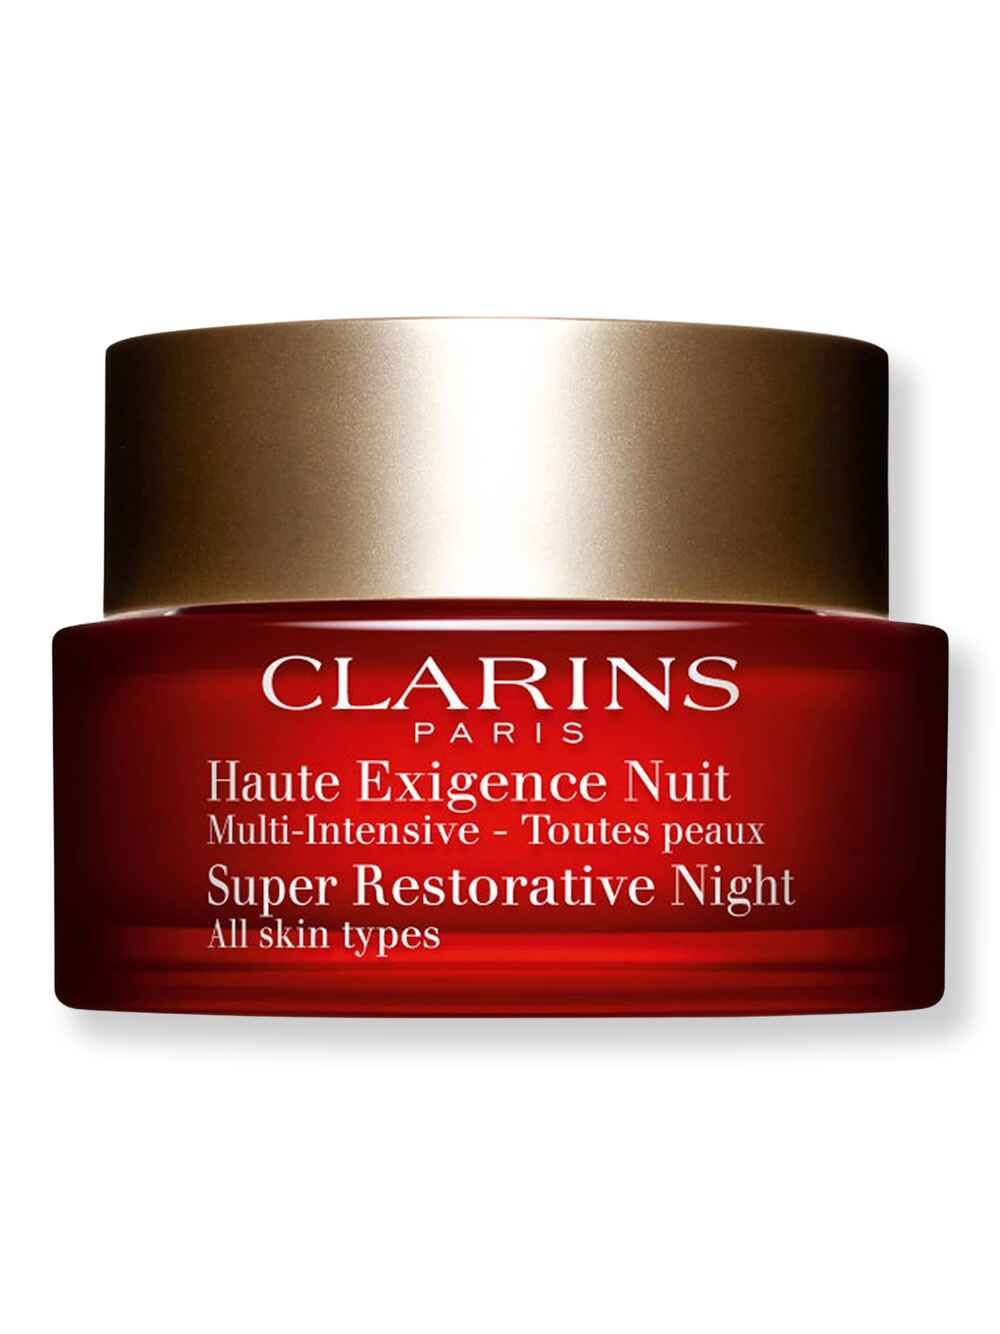 Clarins Clarins Super Restorative Night Wear 1.6 oz Night Creams 